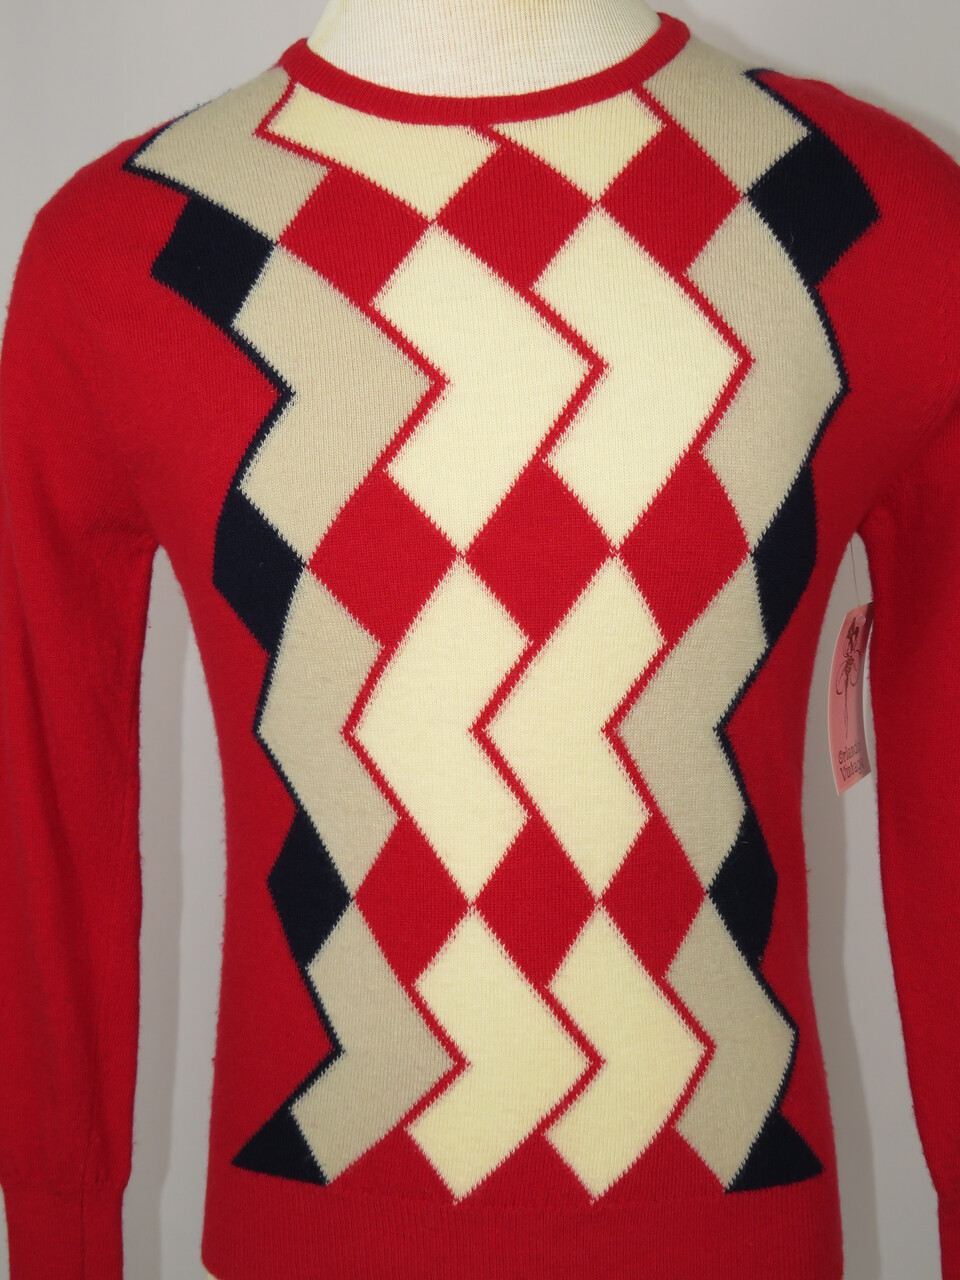 Lyle & Scott Red, White, & Black Argyle Sweater - Orlando Vintage